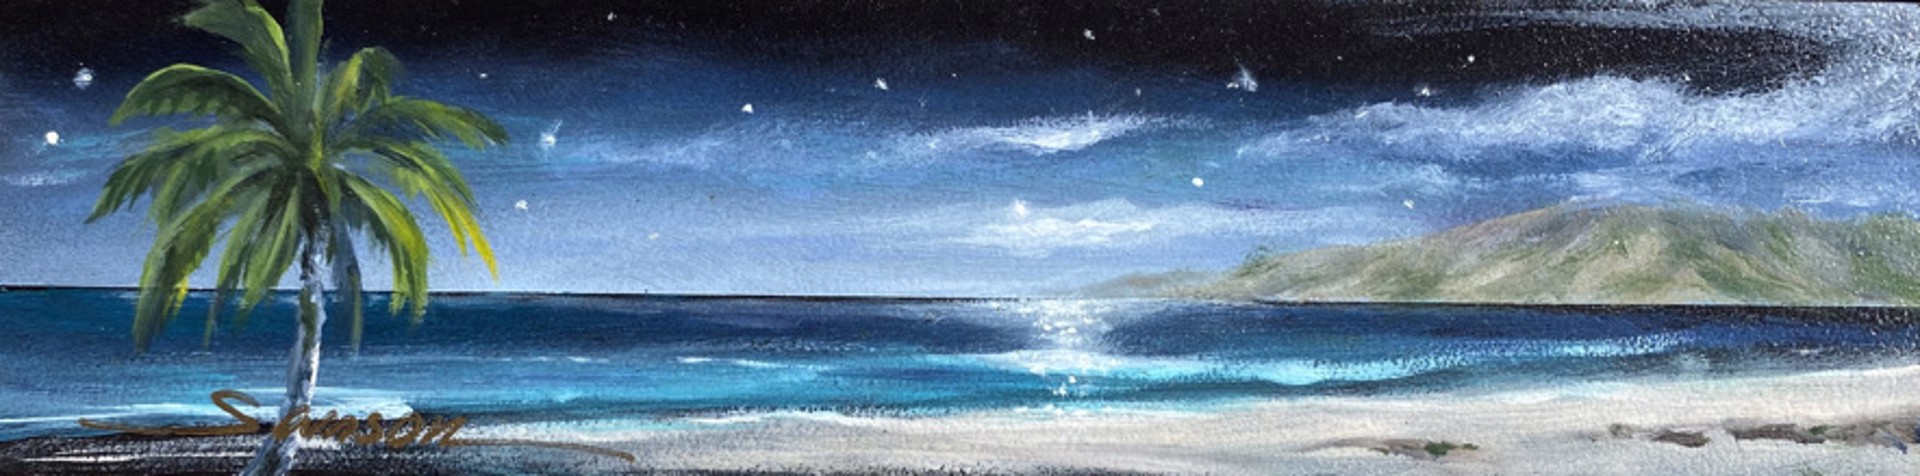 Starlight Cove by Lee Samson